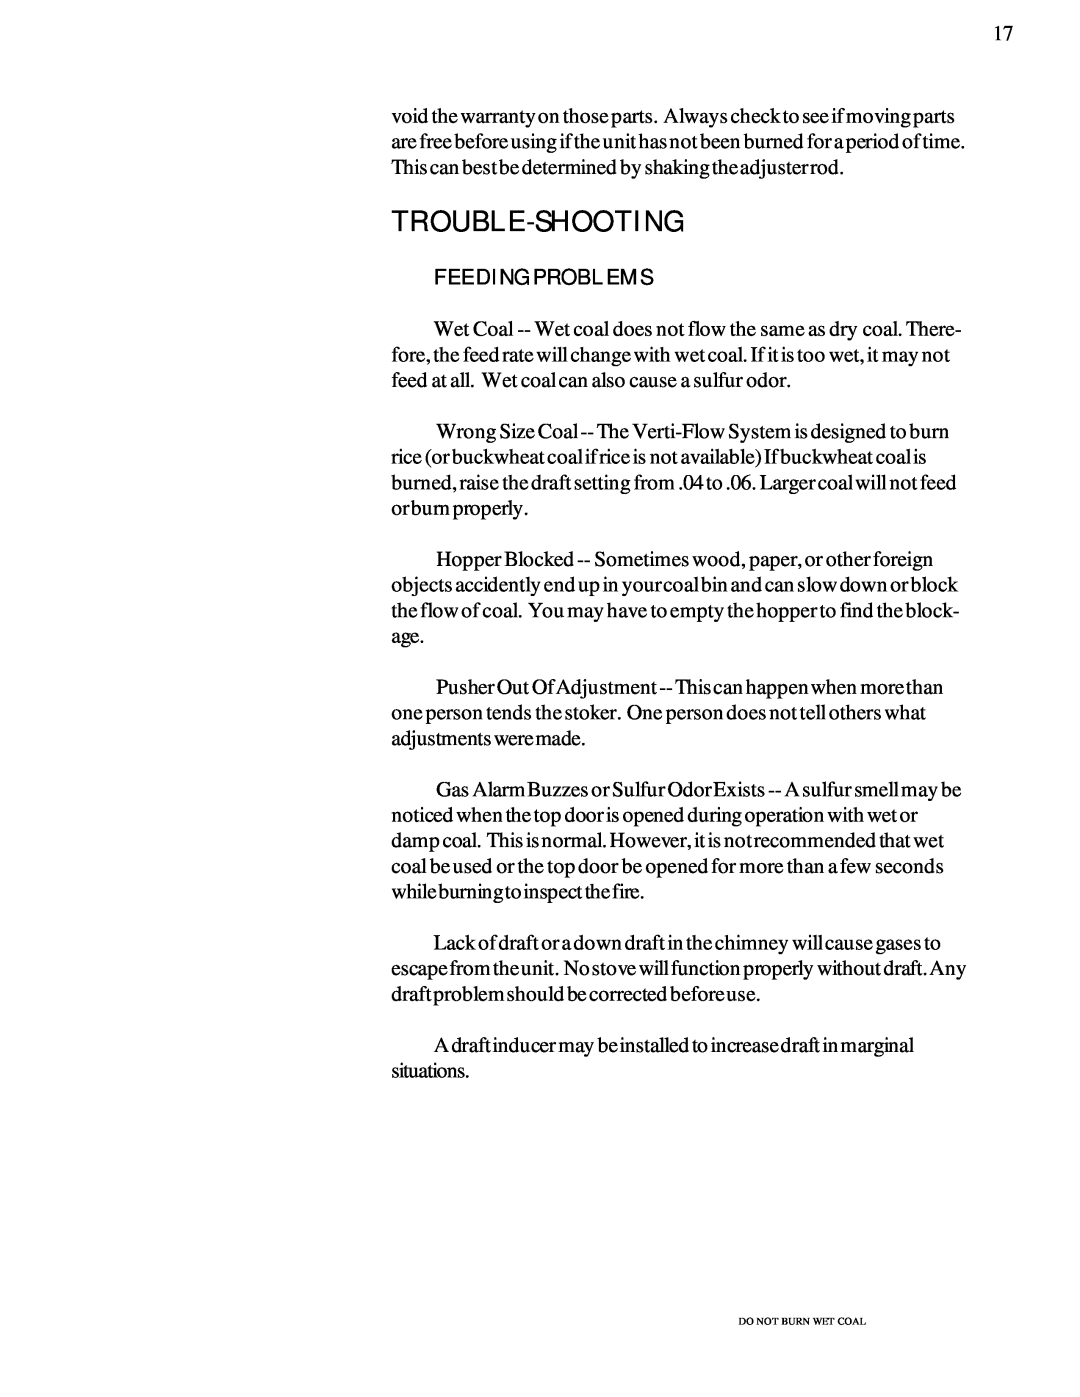 Harman Stove Company Harman Stove The Harman Magnum Stoker manual Trouble-Shooting, Feedingproblems 